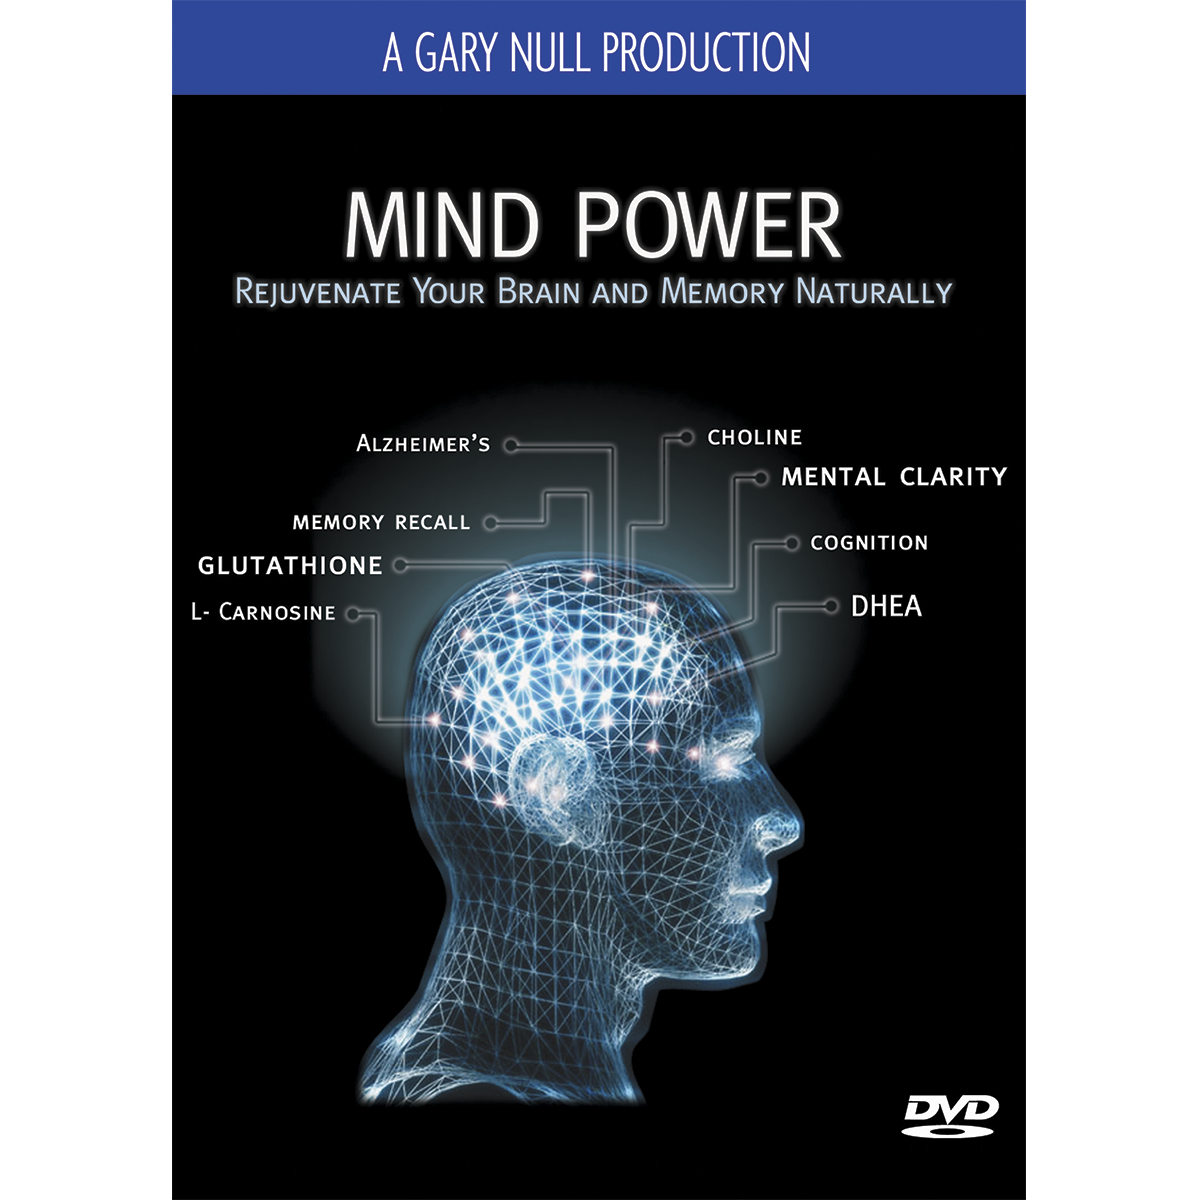 Mind-Power-DVD_ac28dc56-5ca6-4caf-9f98-293f74a6b5b1.png